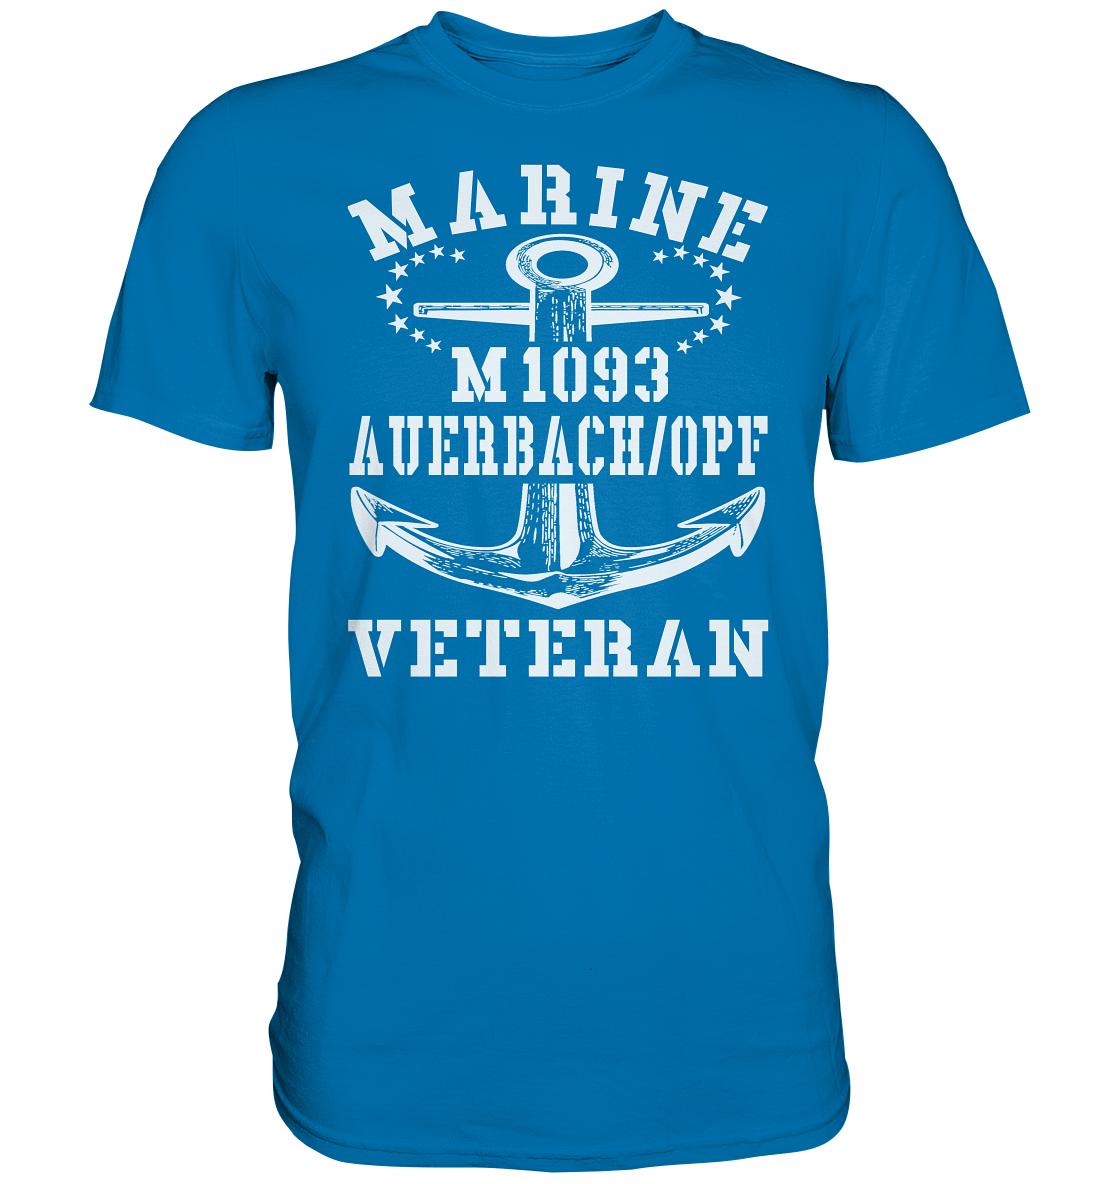 M1093 AUERBACH/OPF Marine Veteran - Premium Shirt